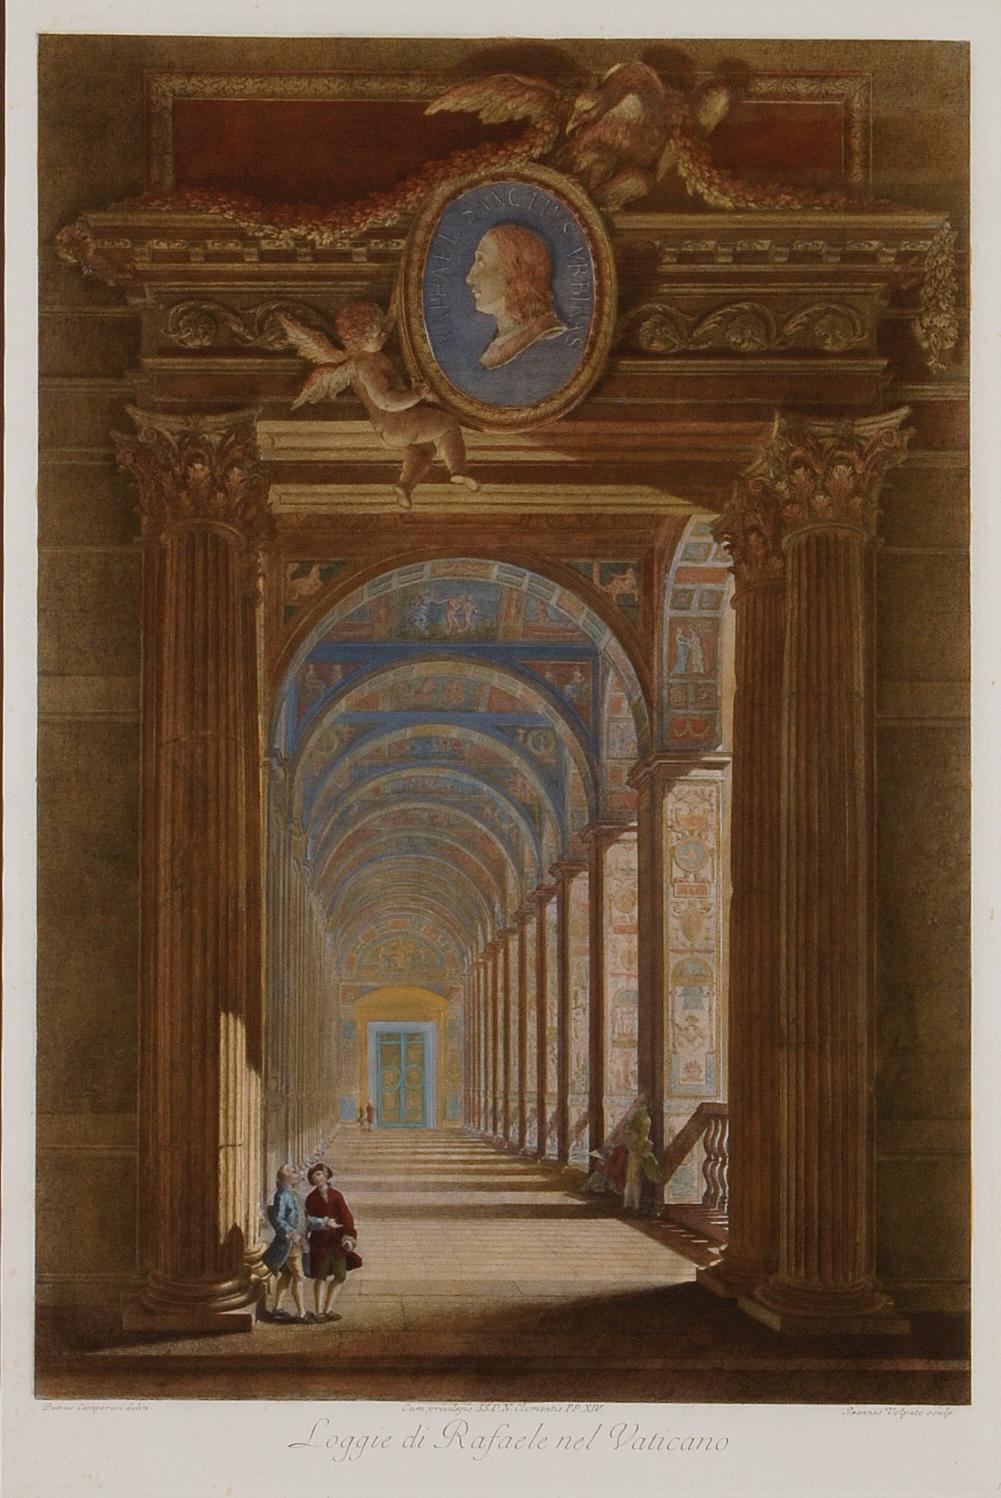  Loggie di Rafaele nel Vaticano: Handkolorierte Gravur von Volpato aus dem 18. Jahrhundert – Print von Giovanni Volpato